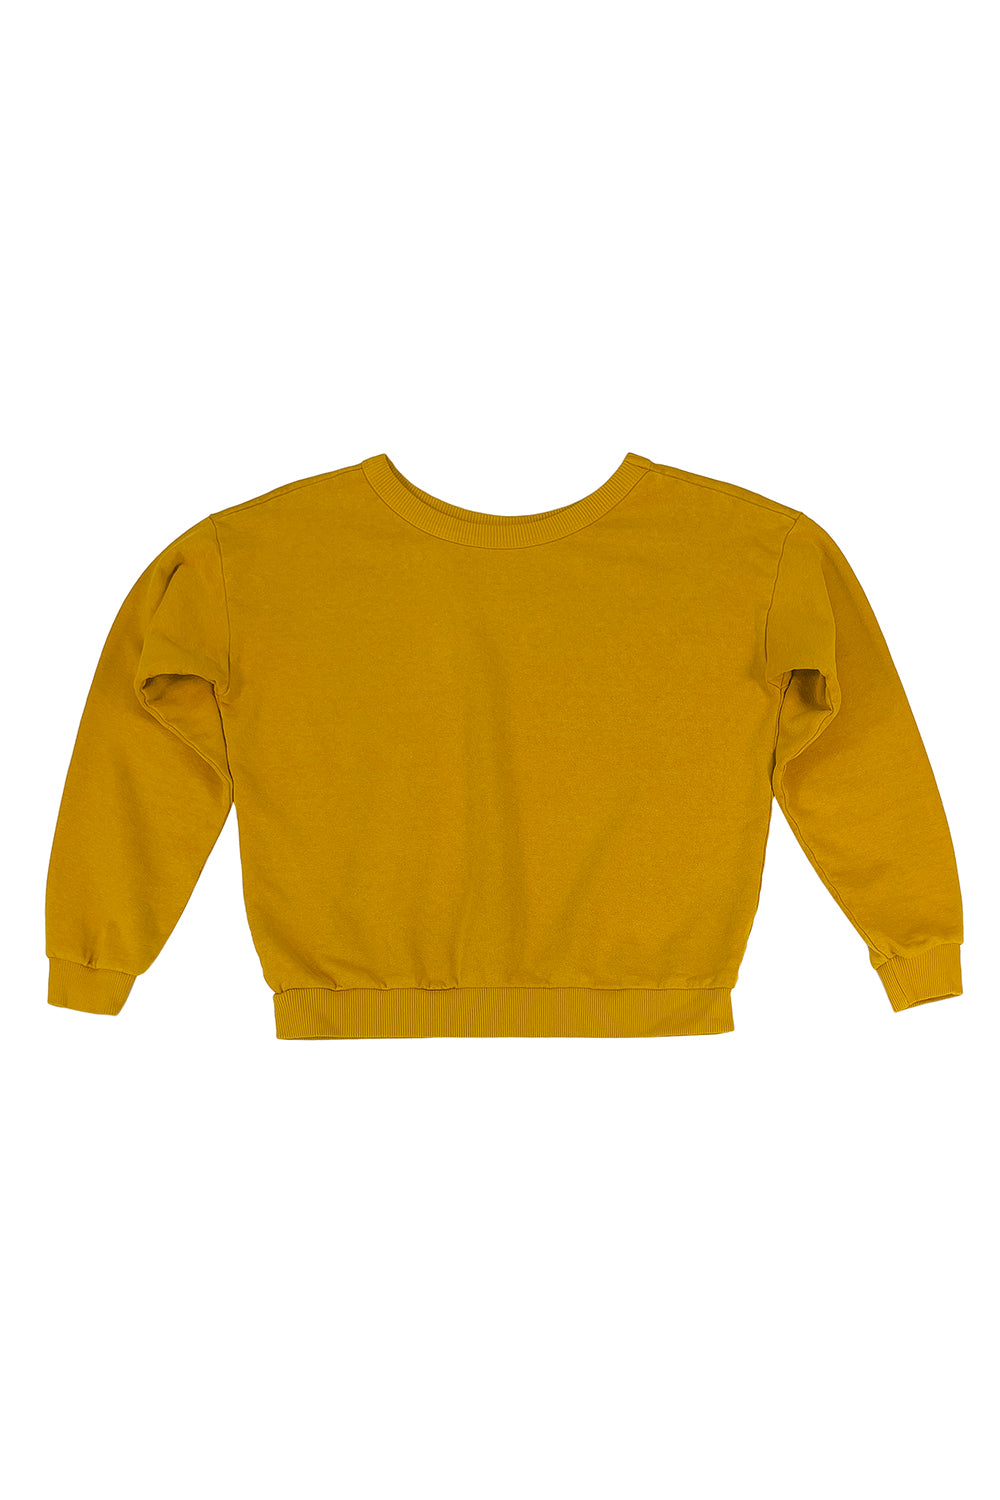 Laguna Cropped Sweatshirt | Jungmaven Hemp Clothing & Accessories / Color: Spicy Mustard